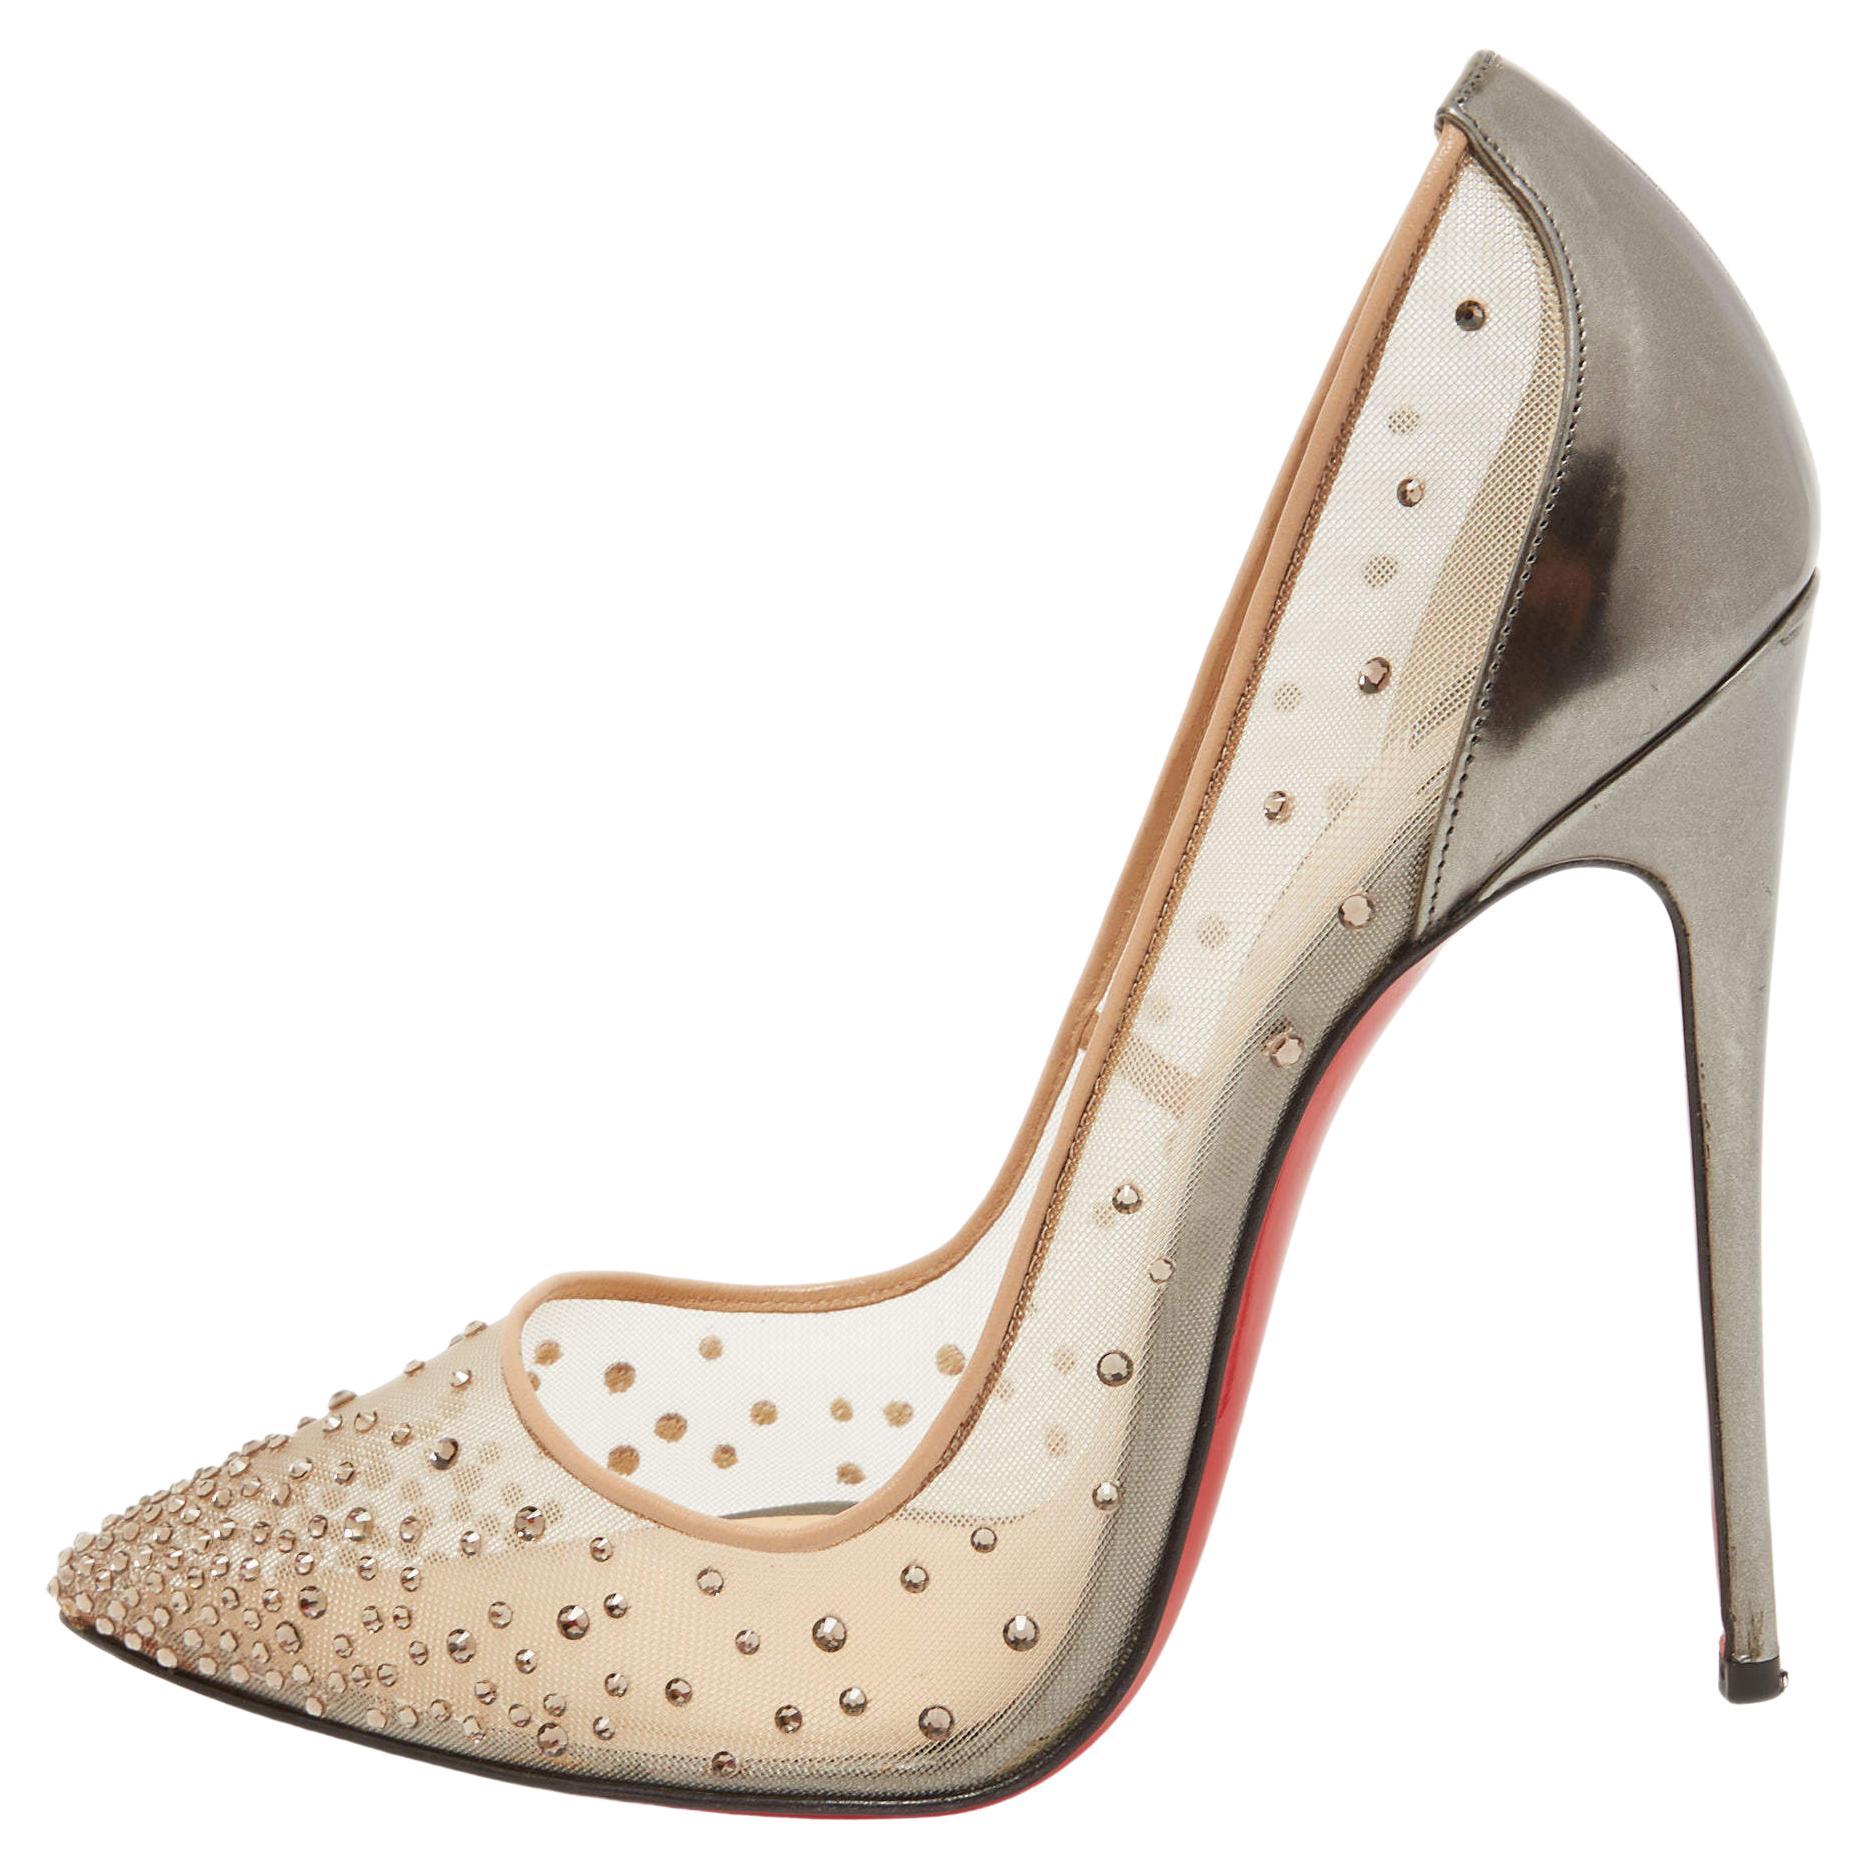 Follies strass leather heels Christian Louboutin Pink size 39 EU